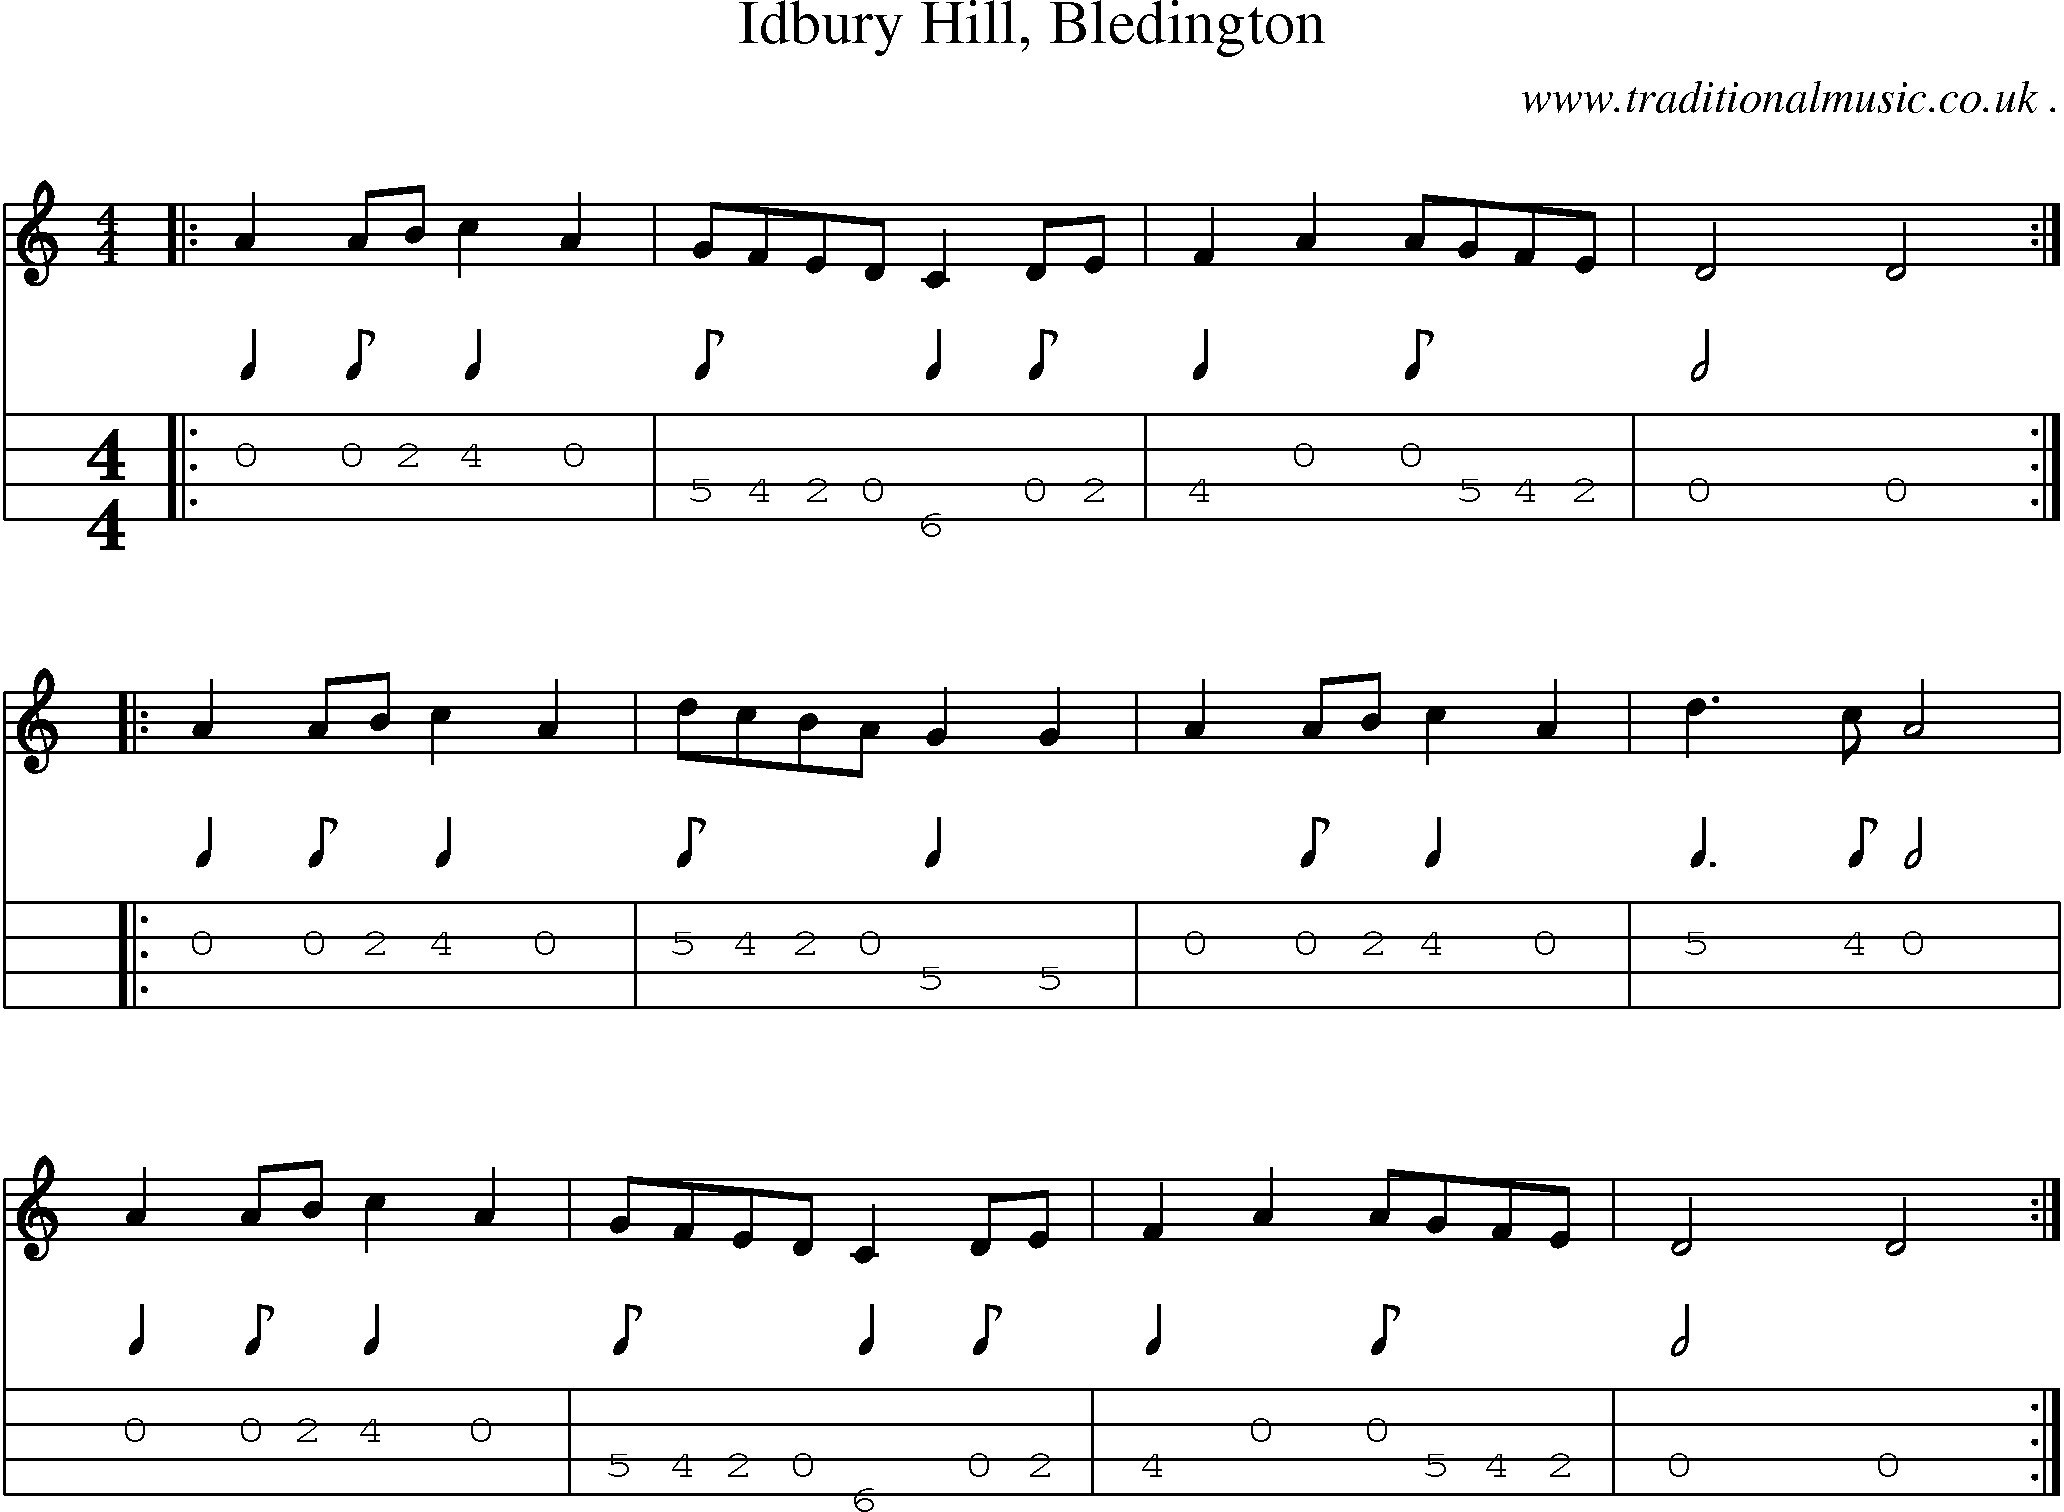 Sheet-Music and Mandolin Tabs for Idbury Hill Bledington